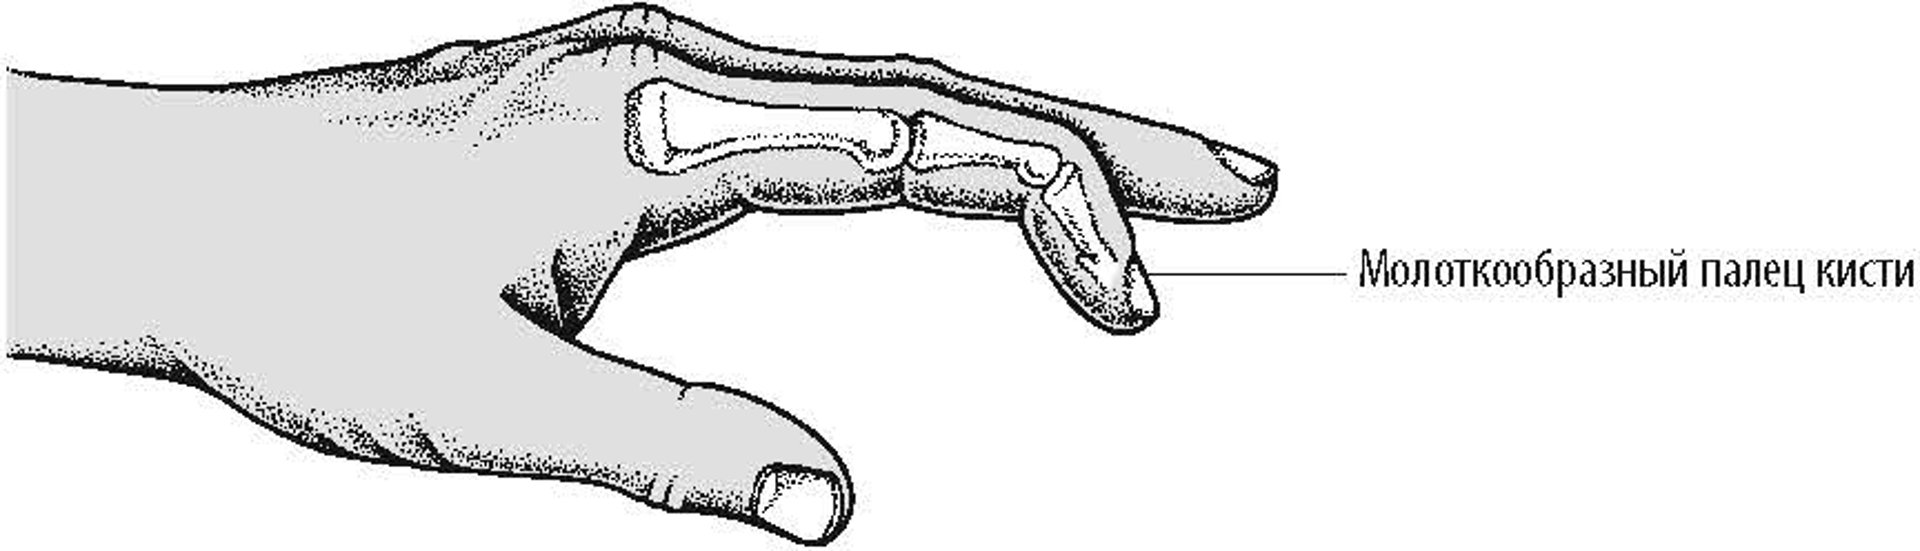 Молоткообразная деформация пальцев